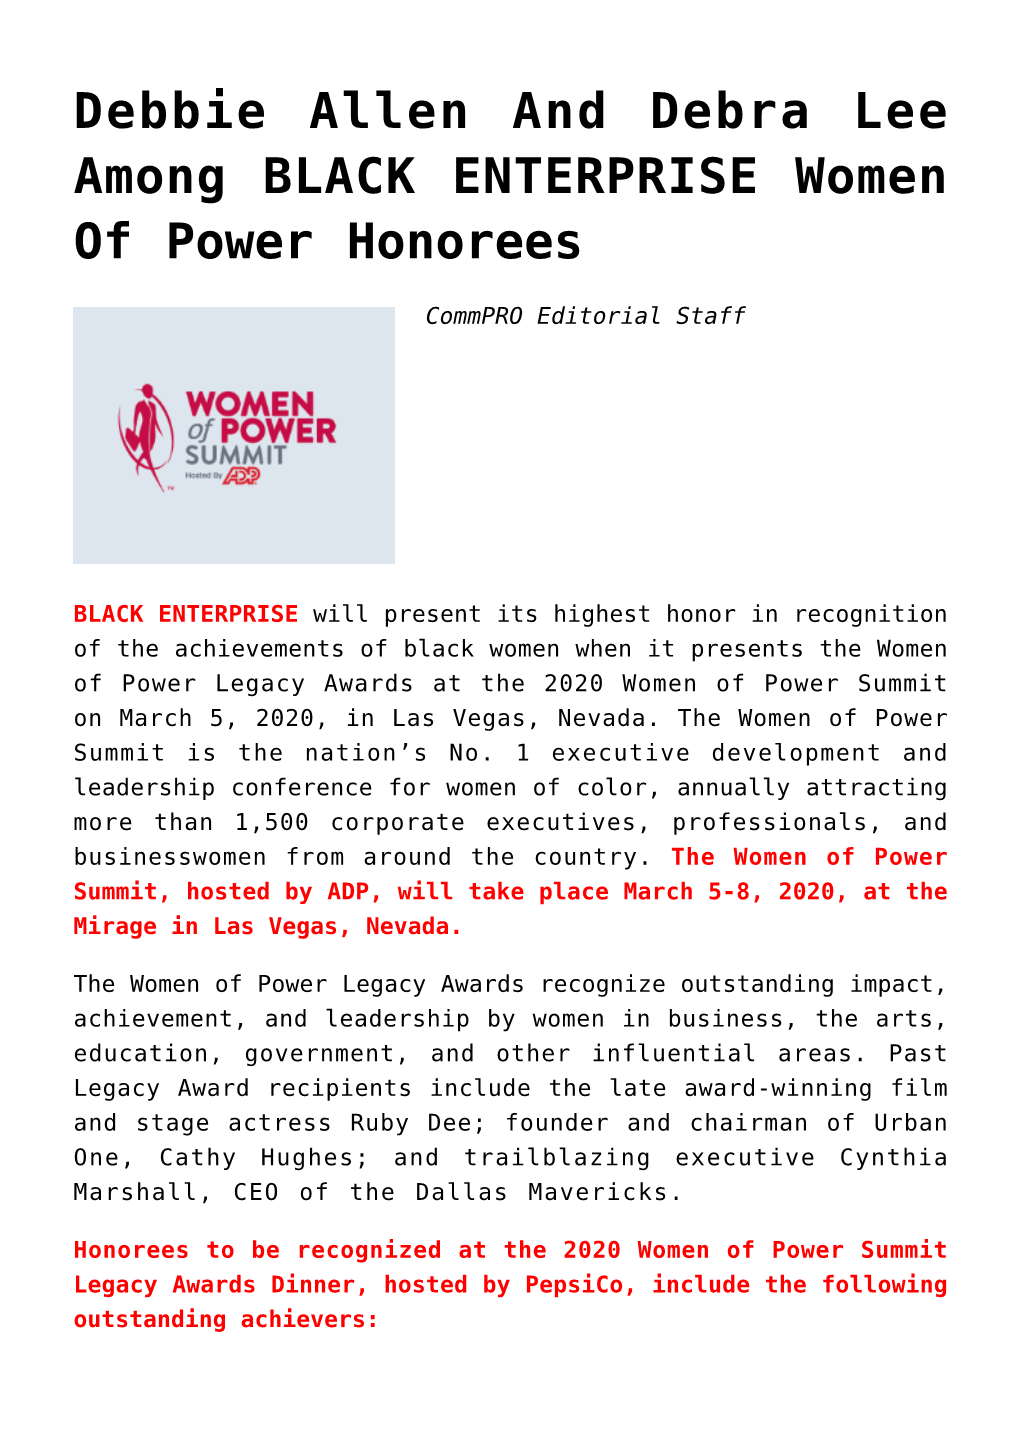 Debbie Allen and Debra Lee Among BLACK ENTERPRISE Women of Power Honorees